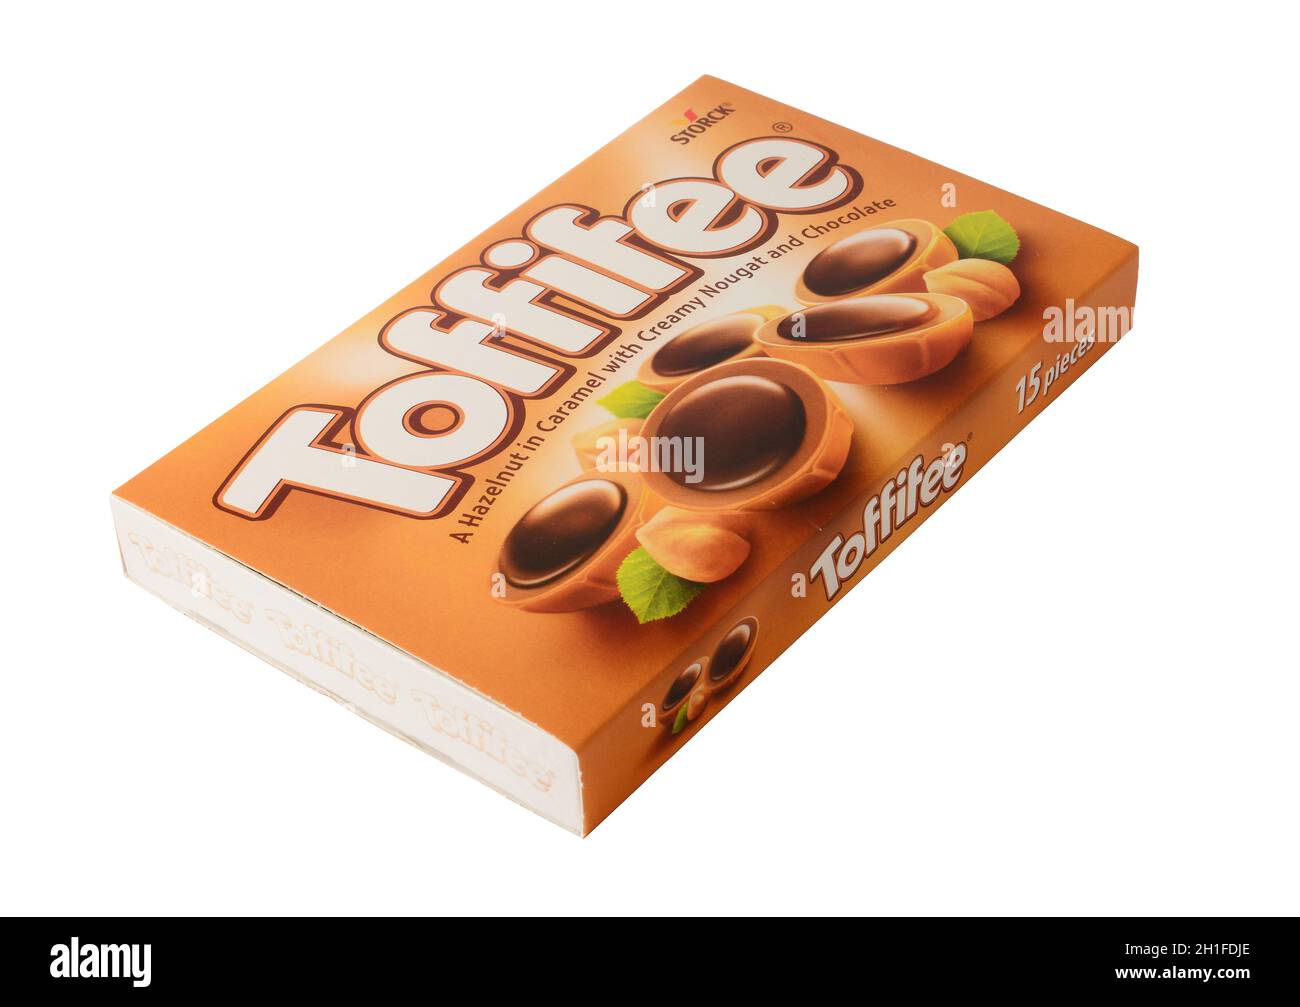 PRAGUE, CZECH REPUBLIC - MAY 29, 2020: Box of Toffifee chocolate